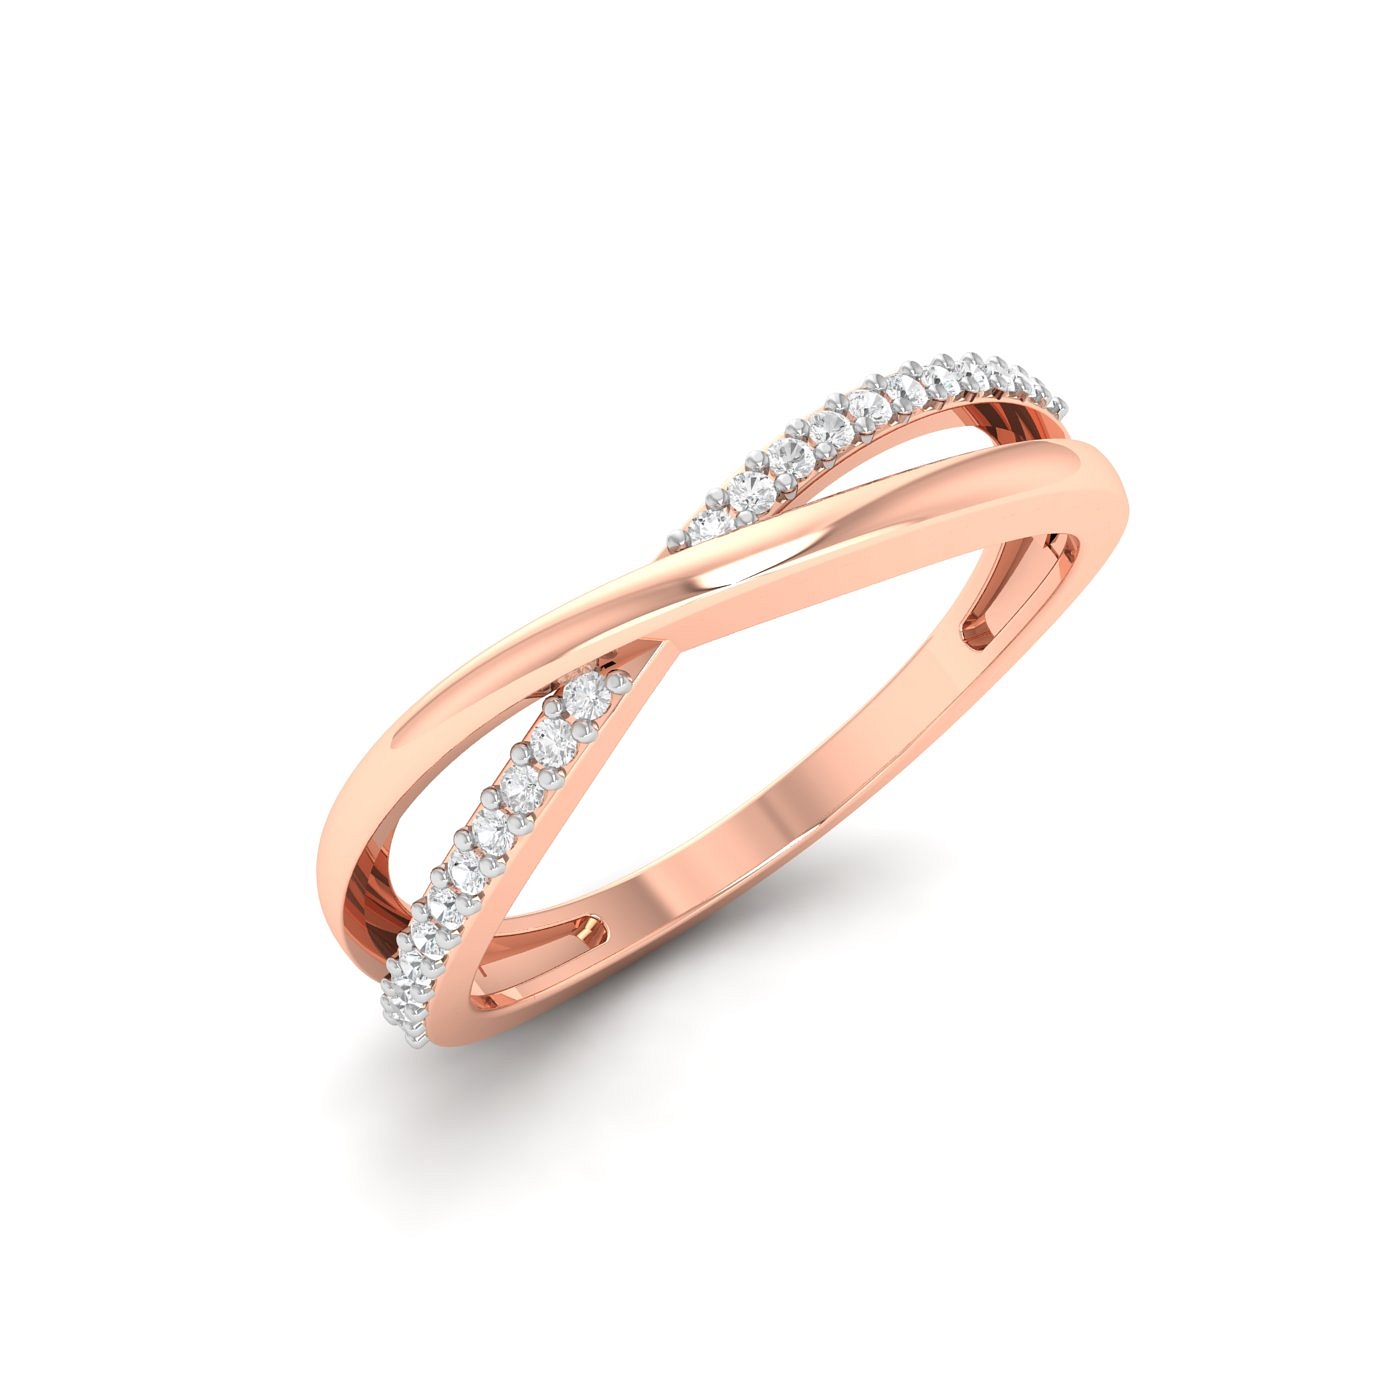 Trendy Diamond Ring Designs for the Modern Woman || Criss - cross Diamond Ring ||